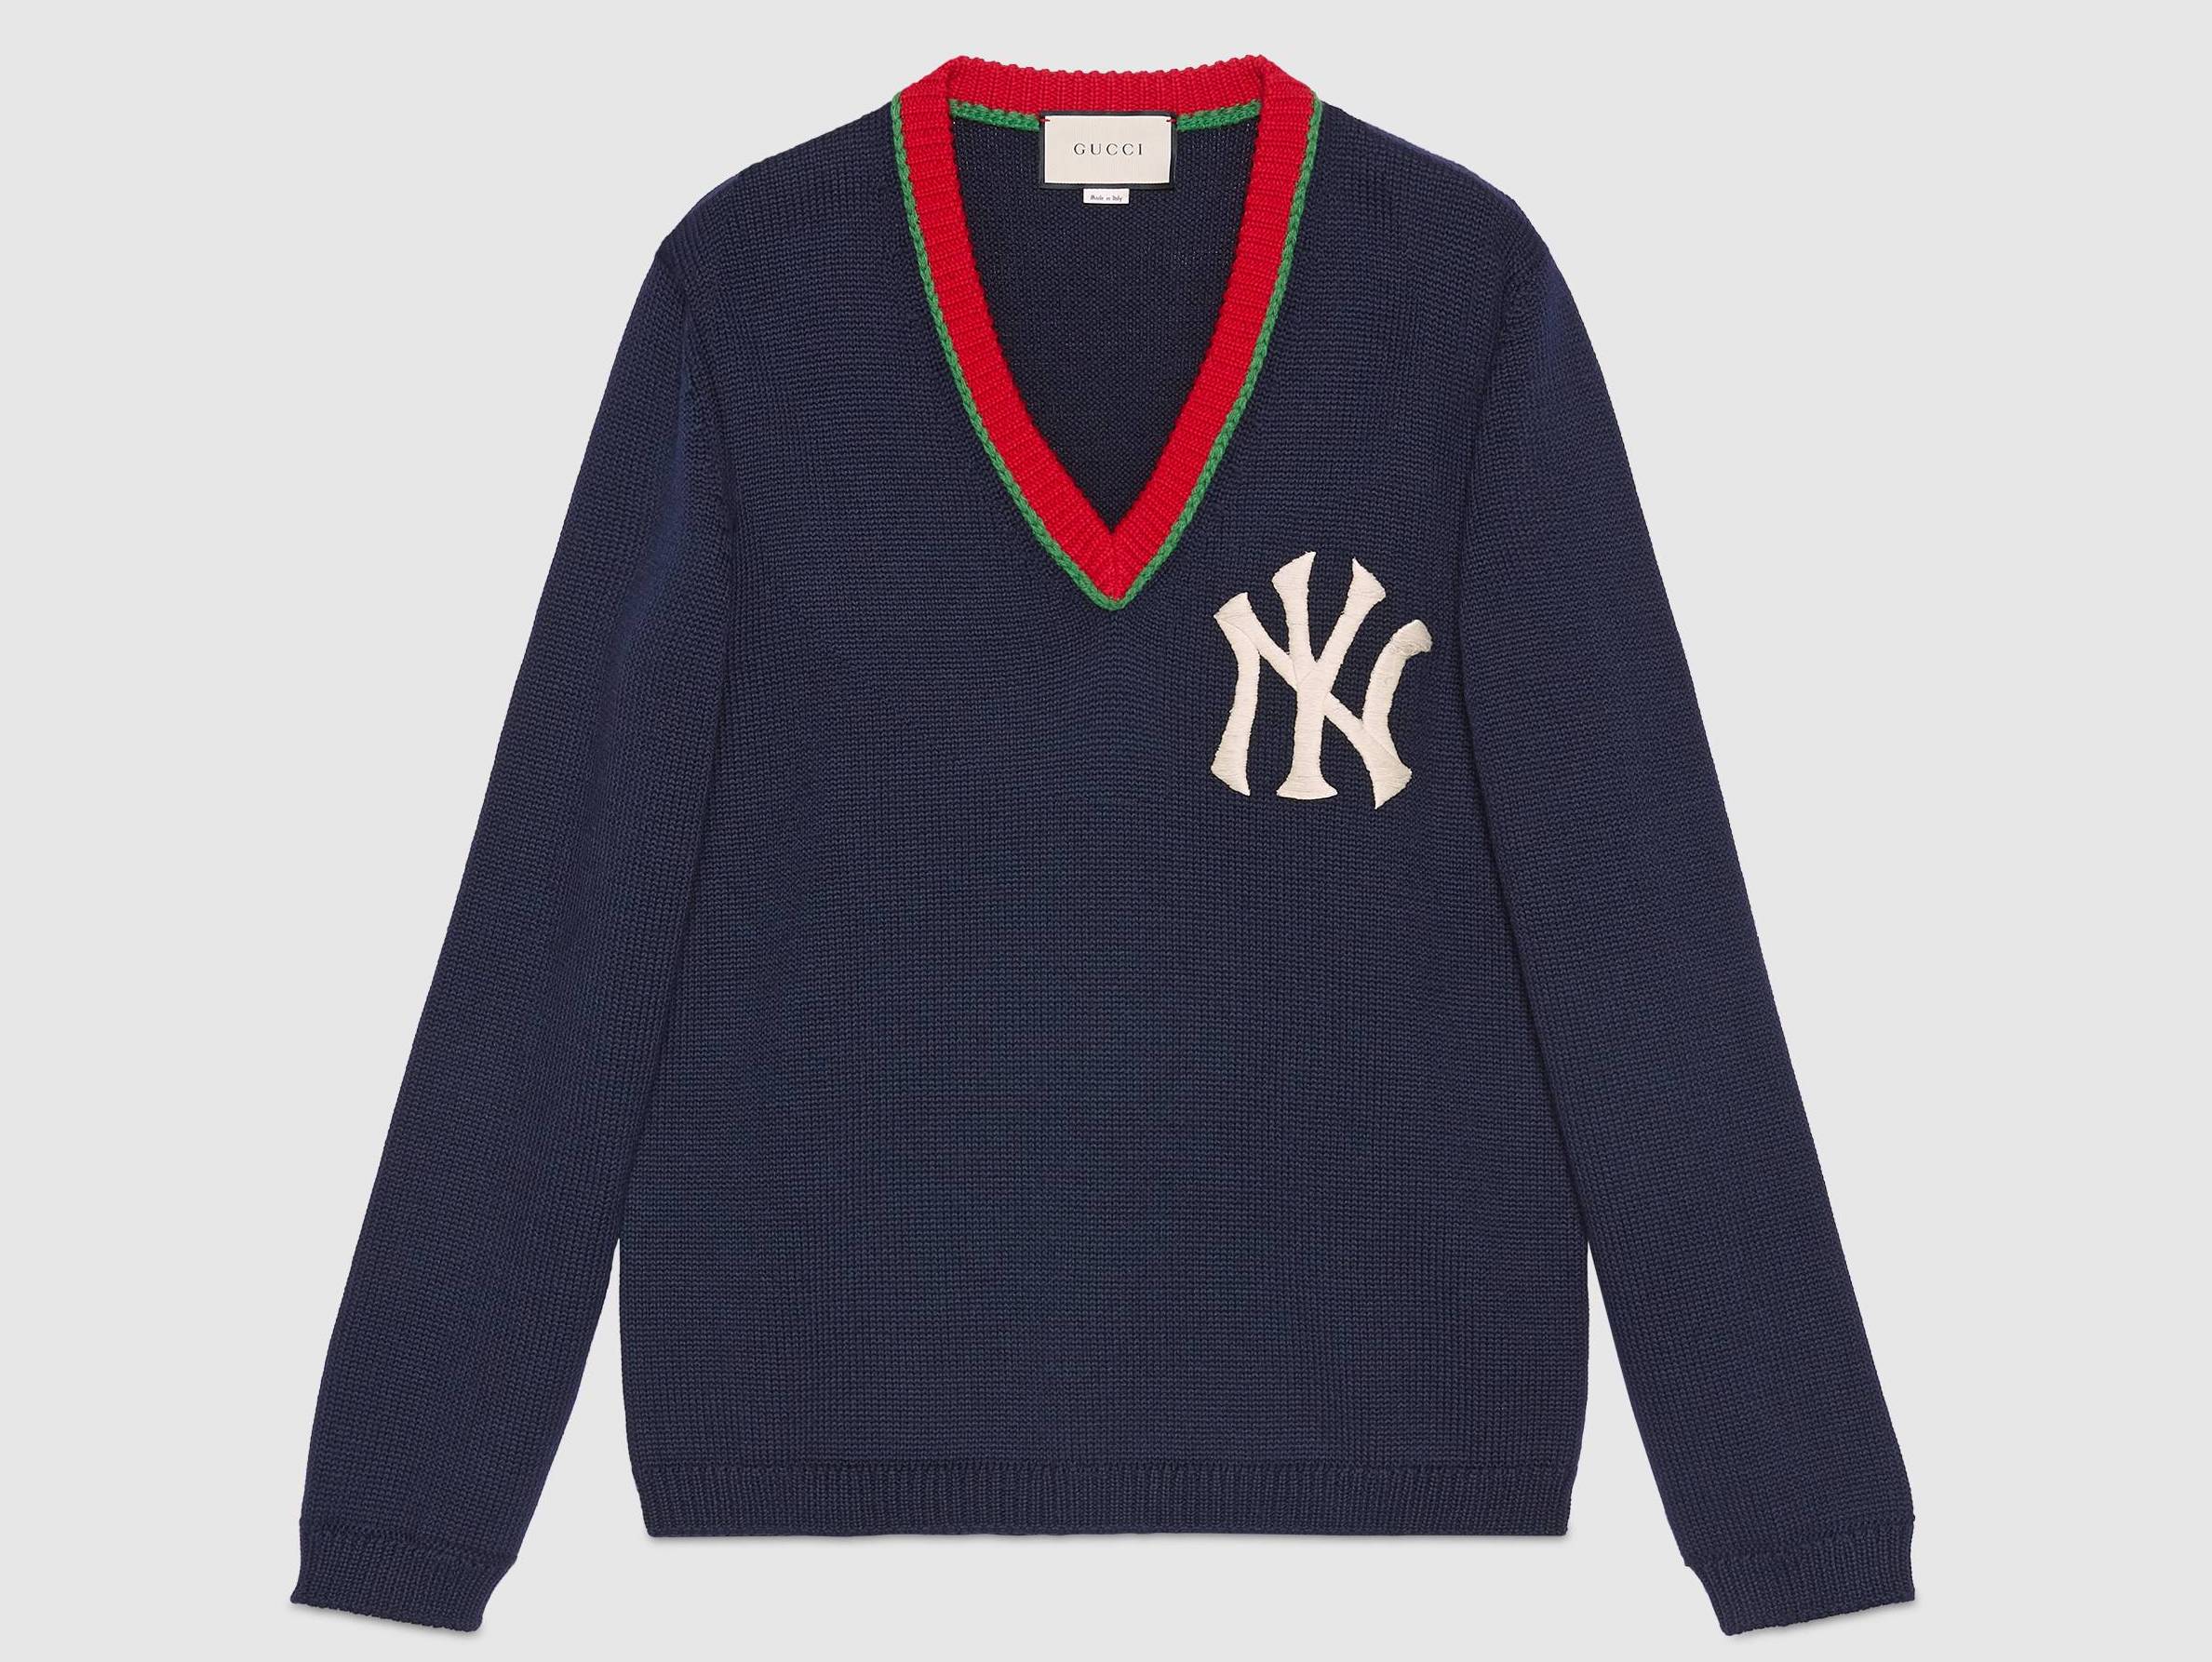 Gucci NY Yankee Sweater